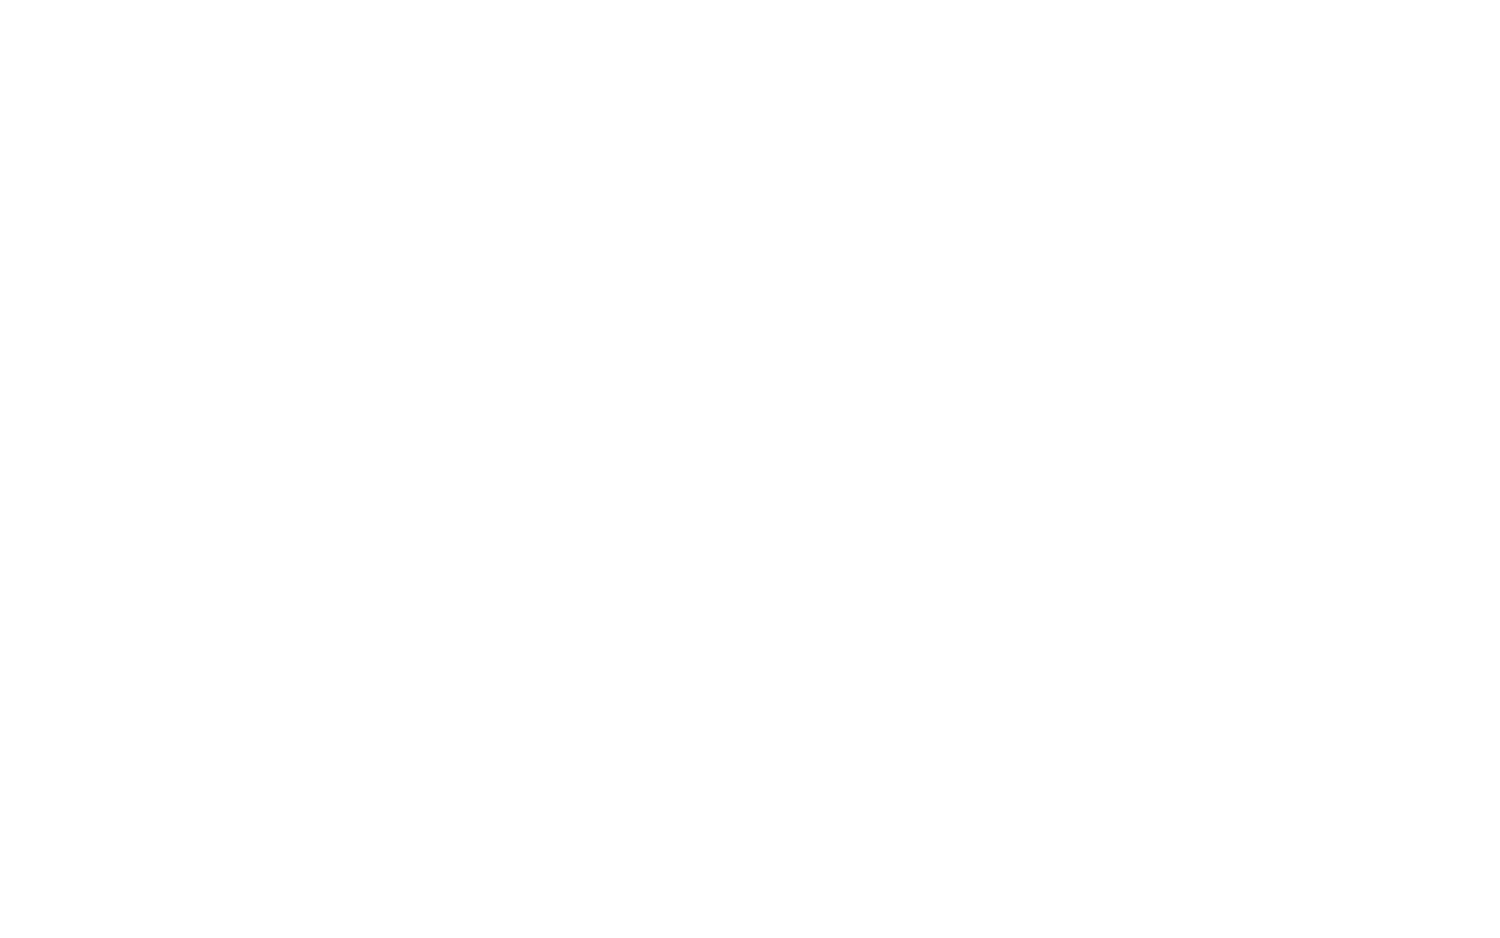 K. Huang Photography